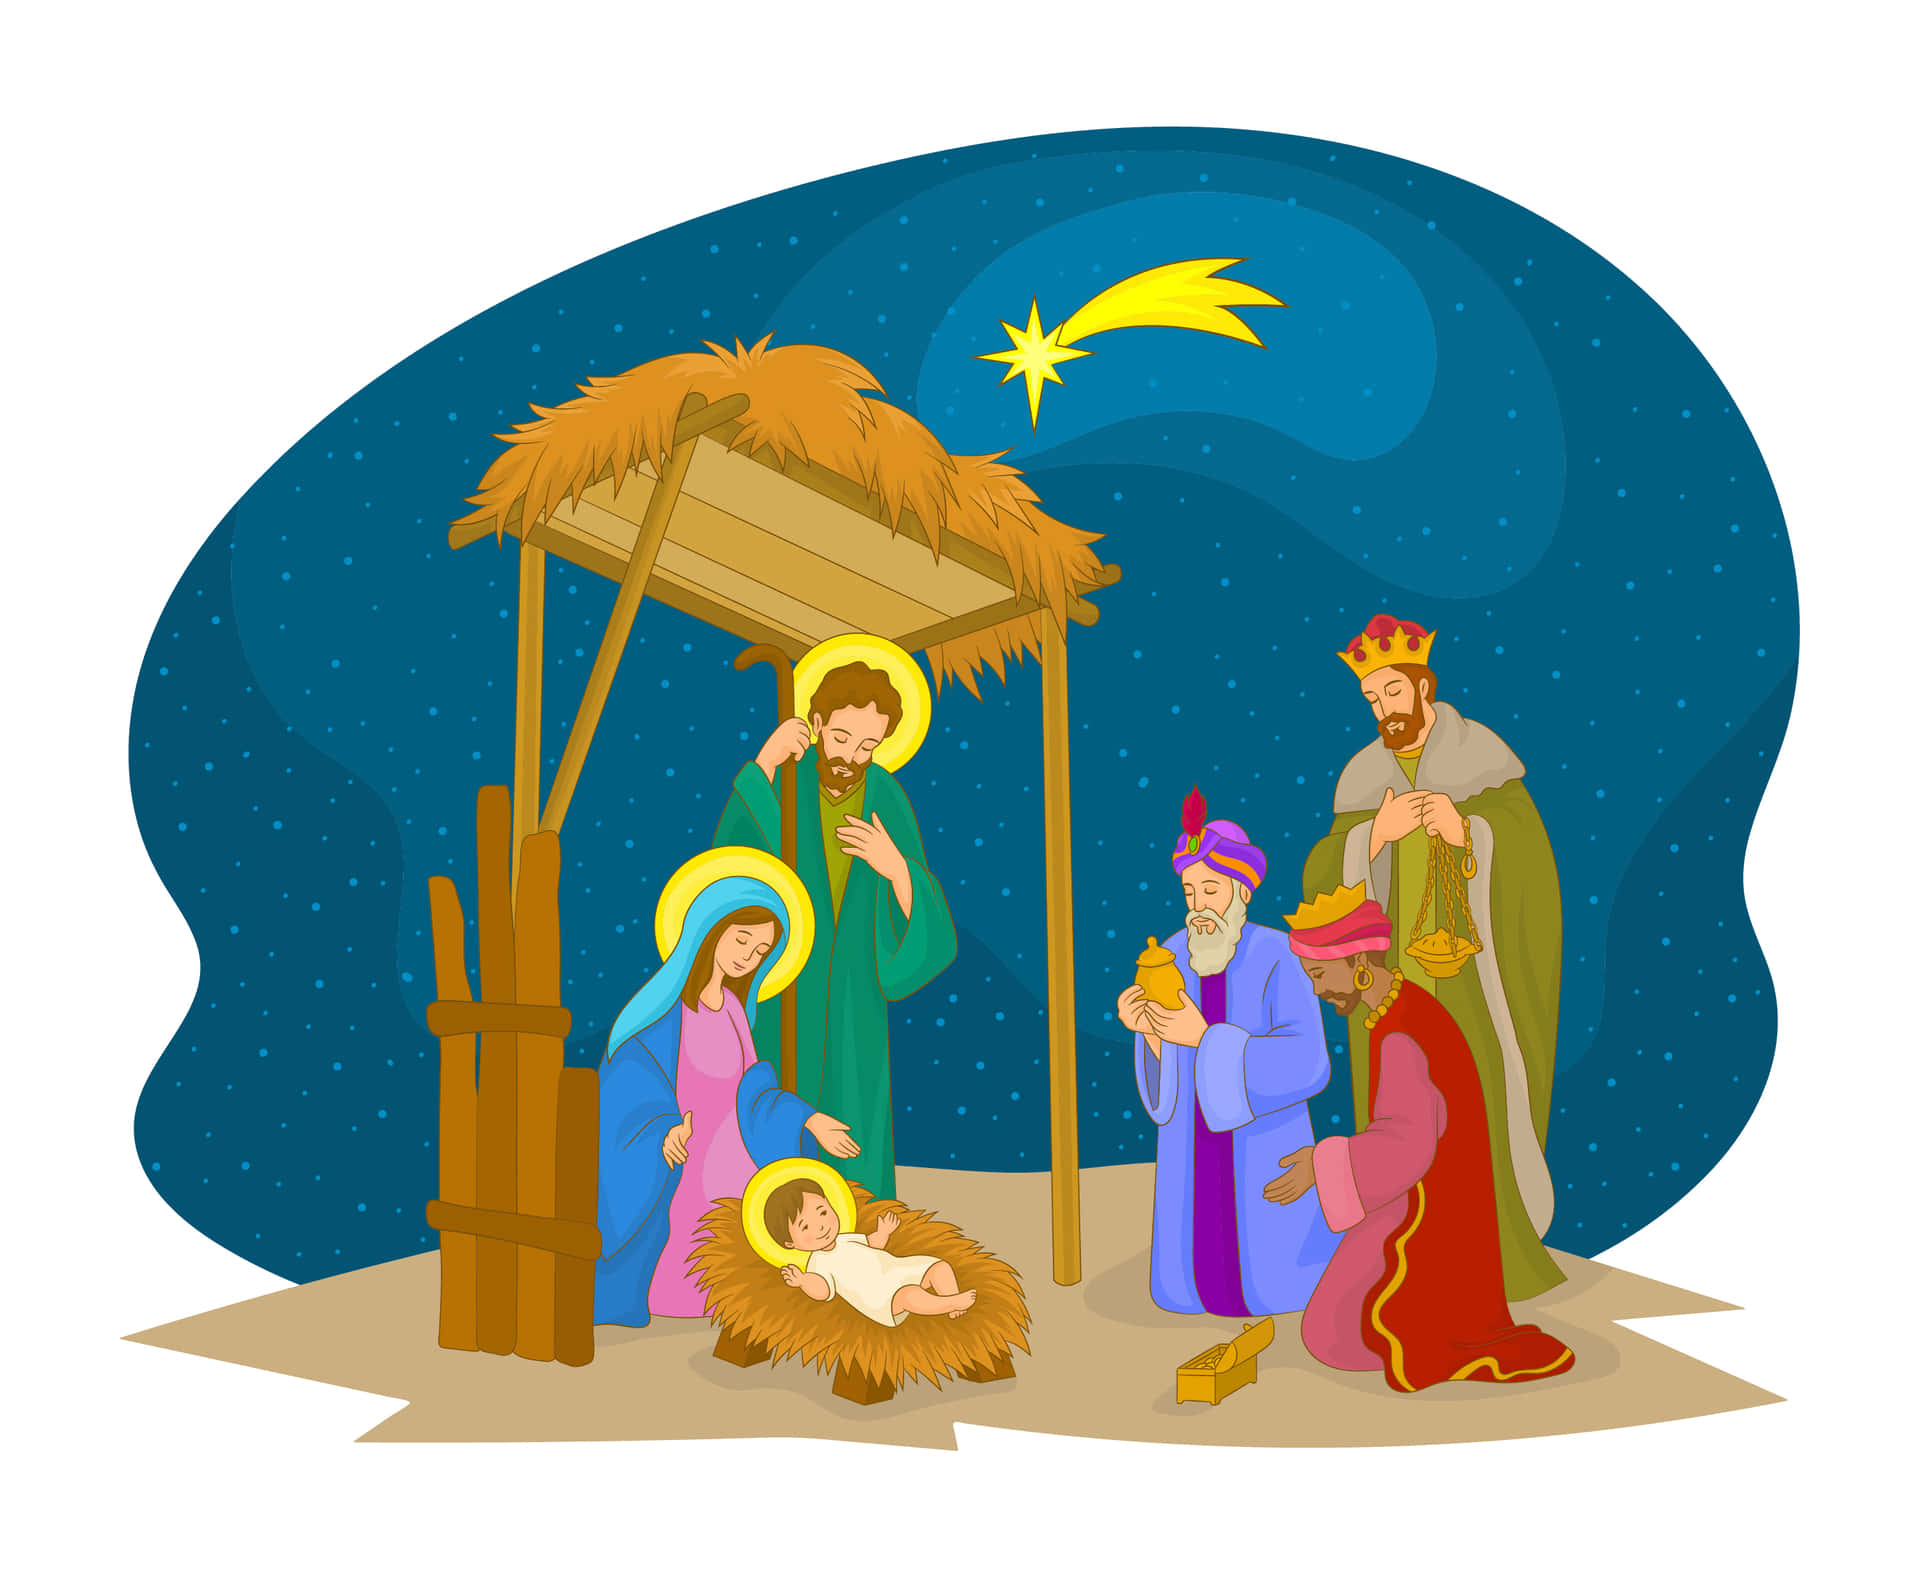 Nativity Scene Illustrates the Birth of Jesus Christ